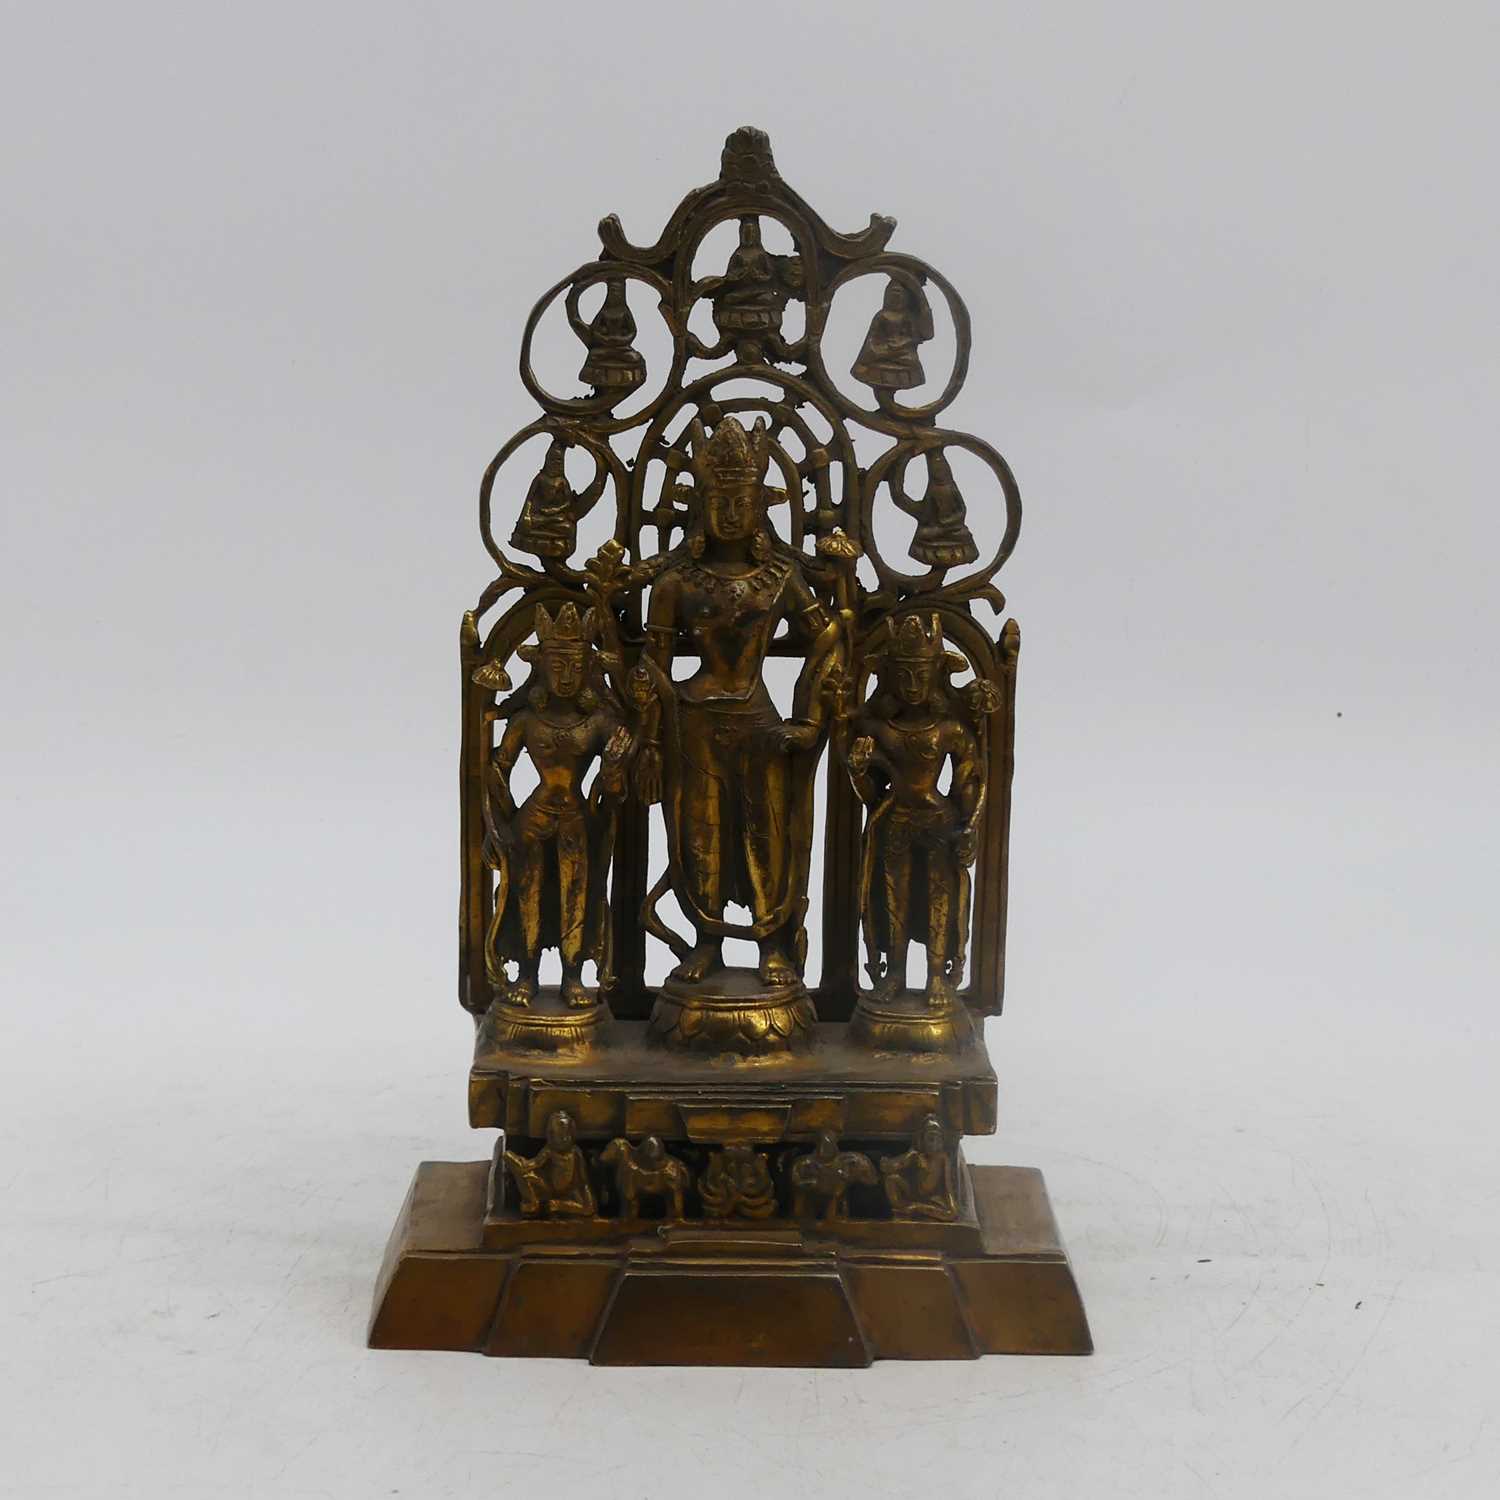 An Indian style gilt metal figure group of deities, height 28cm